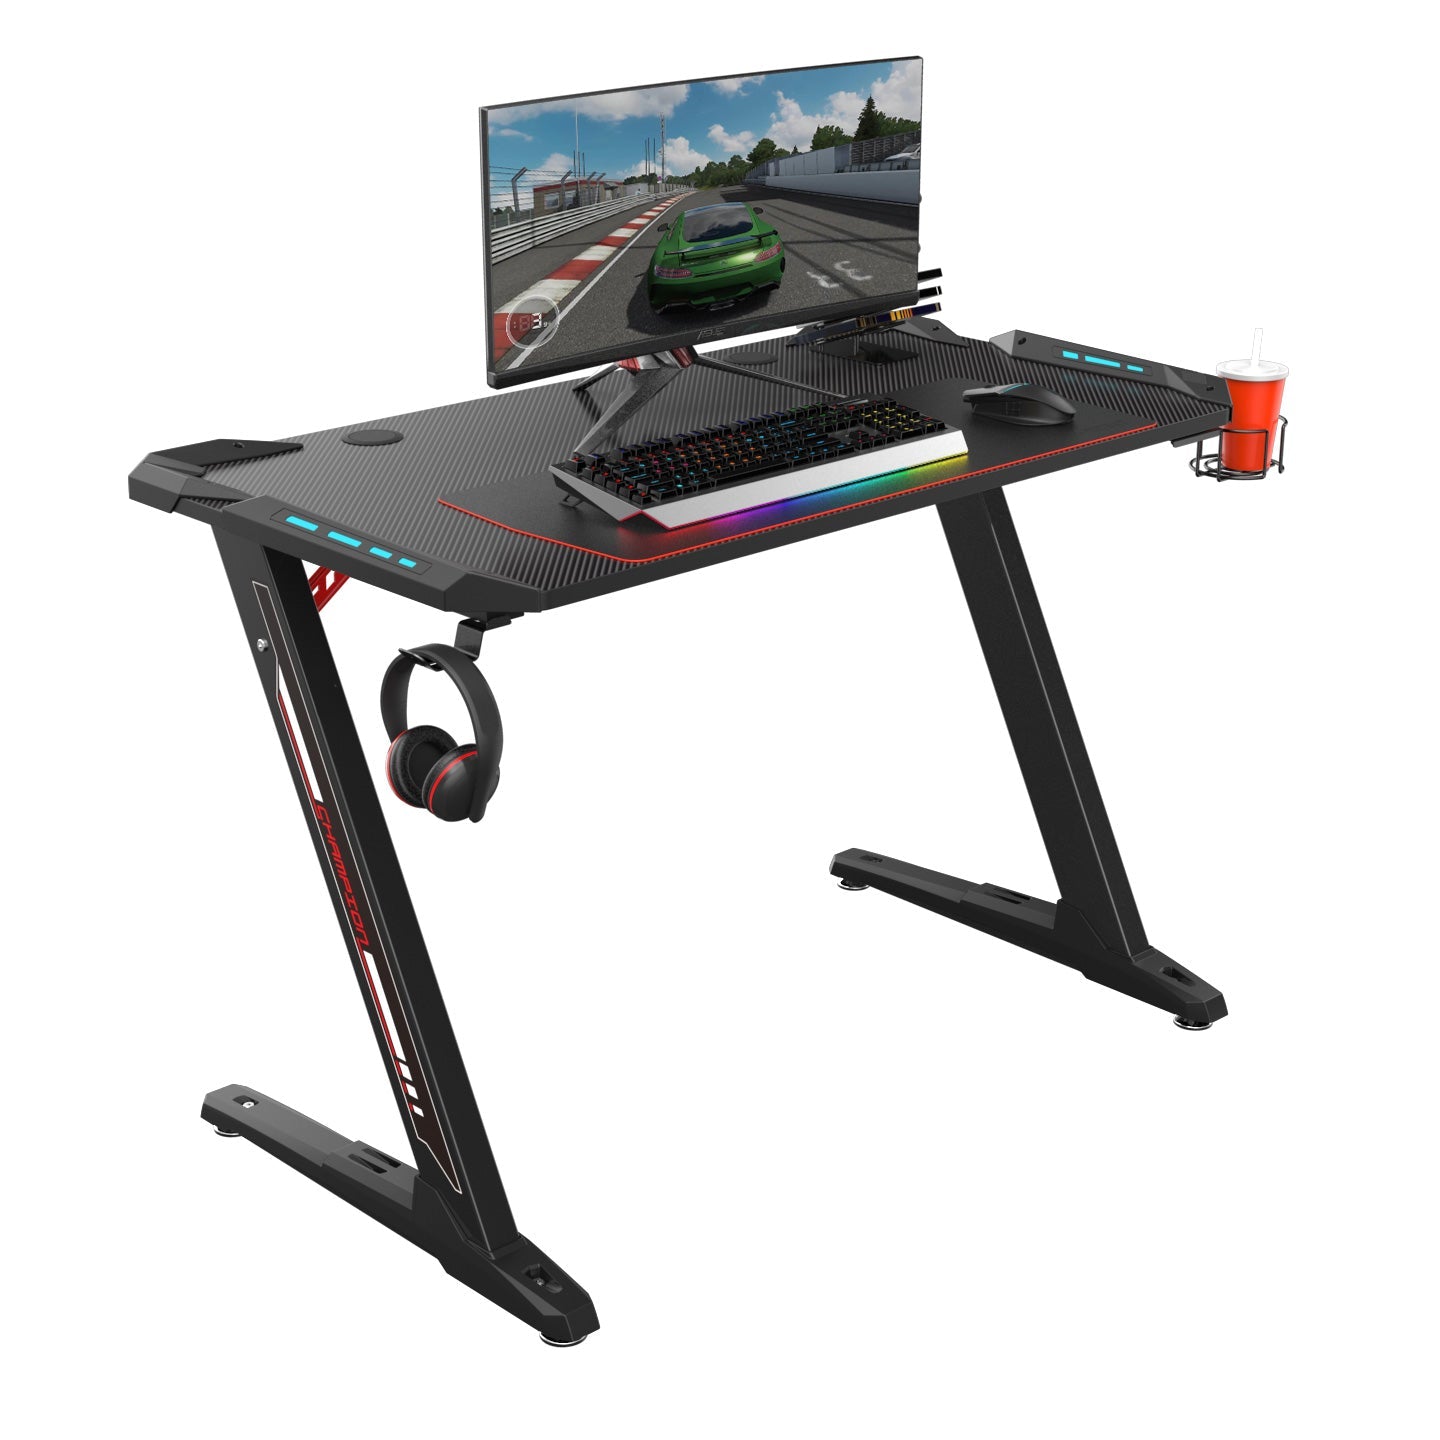 (Renewed) Eureka Ergonomic Gaming Table - Z1 S, 44 Inches, RBG Light